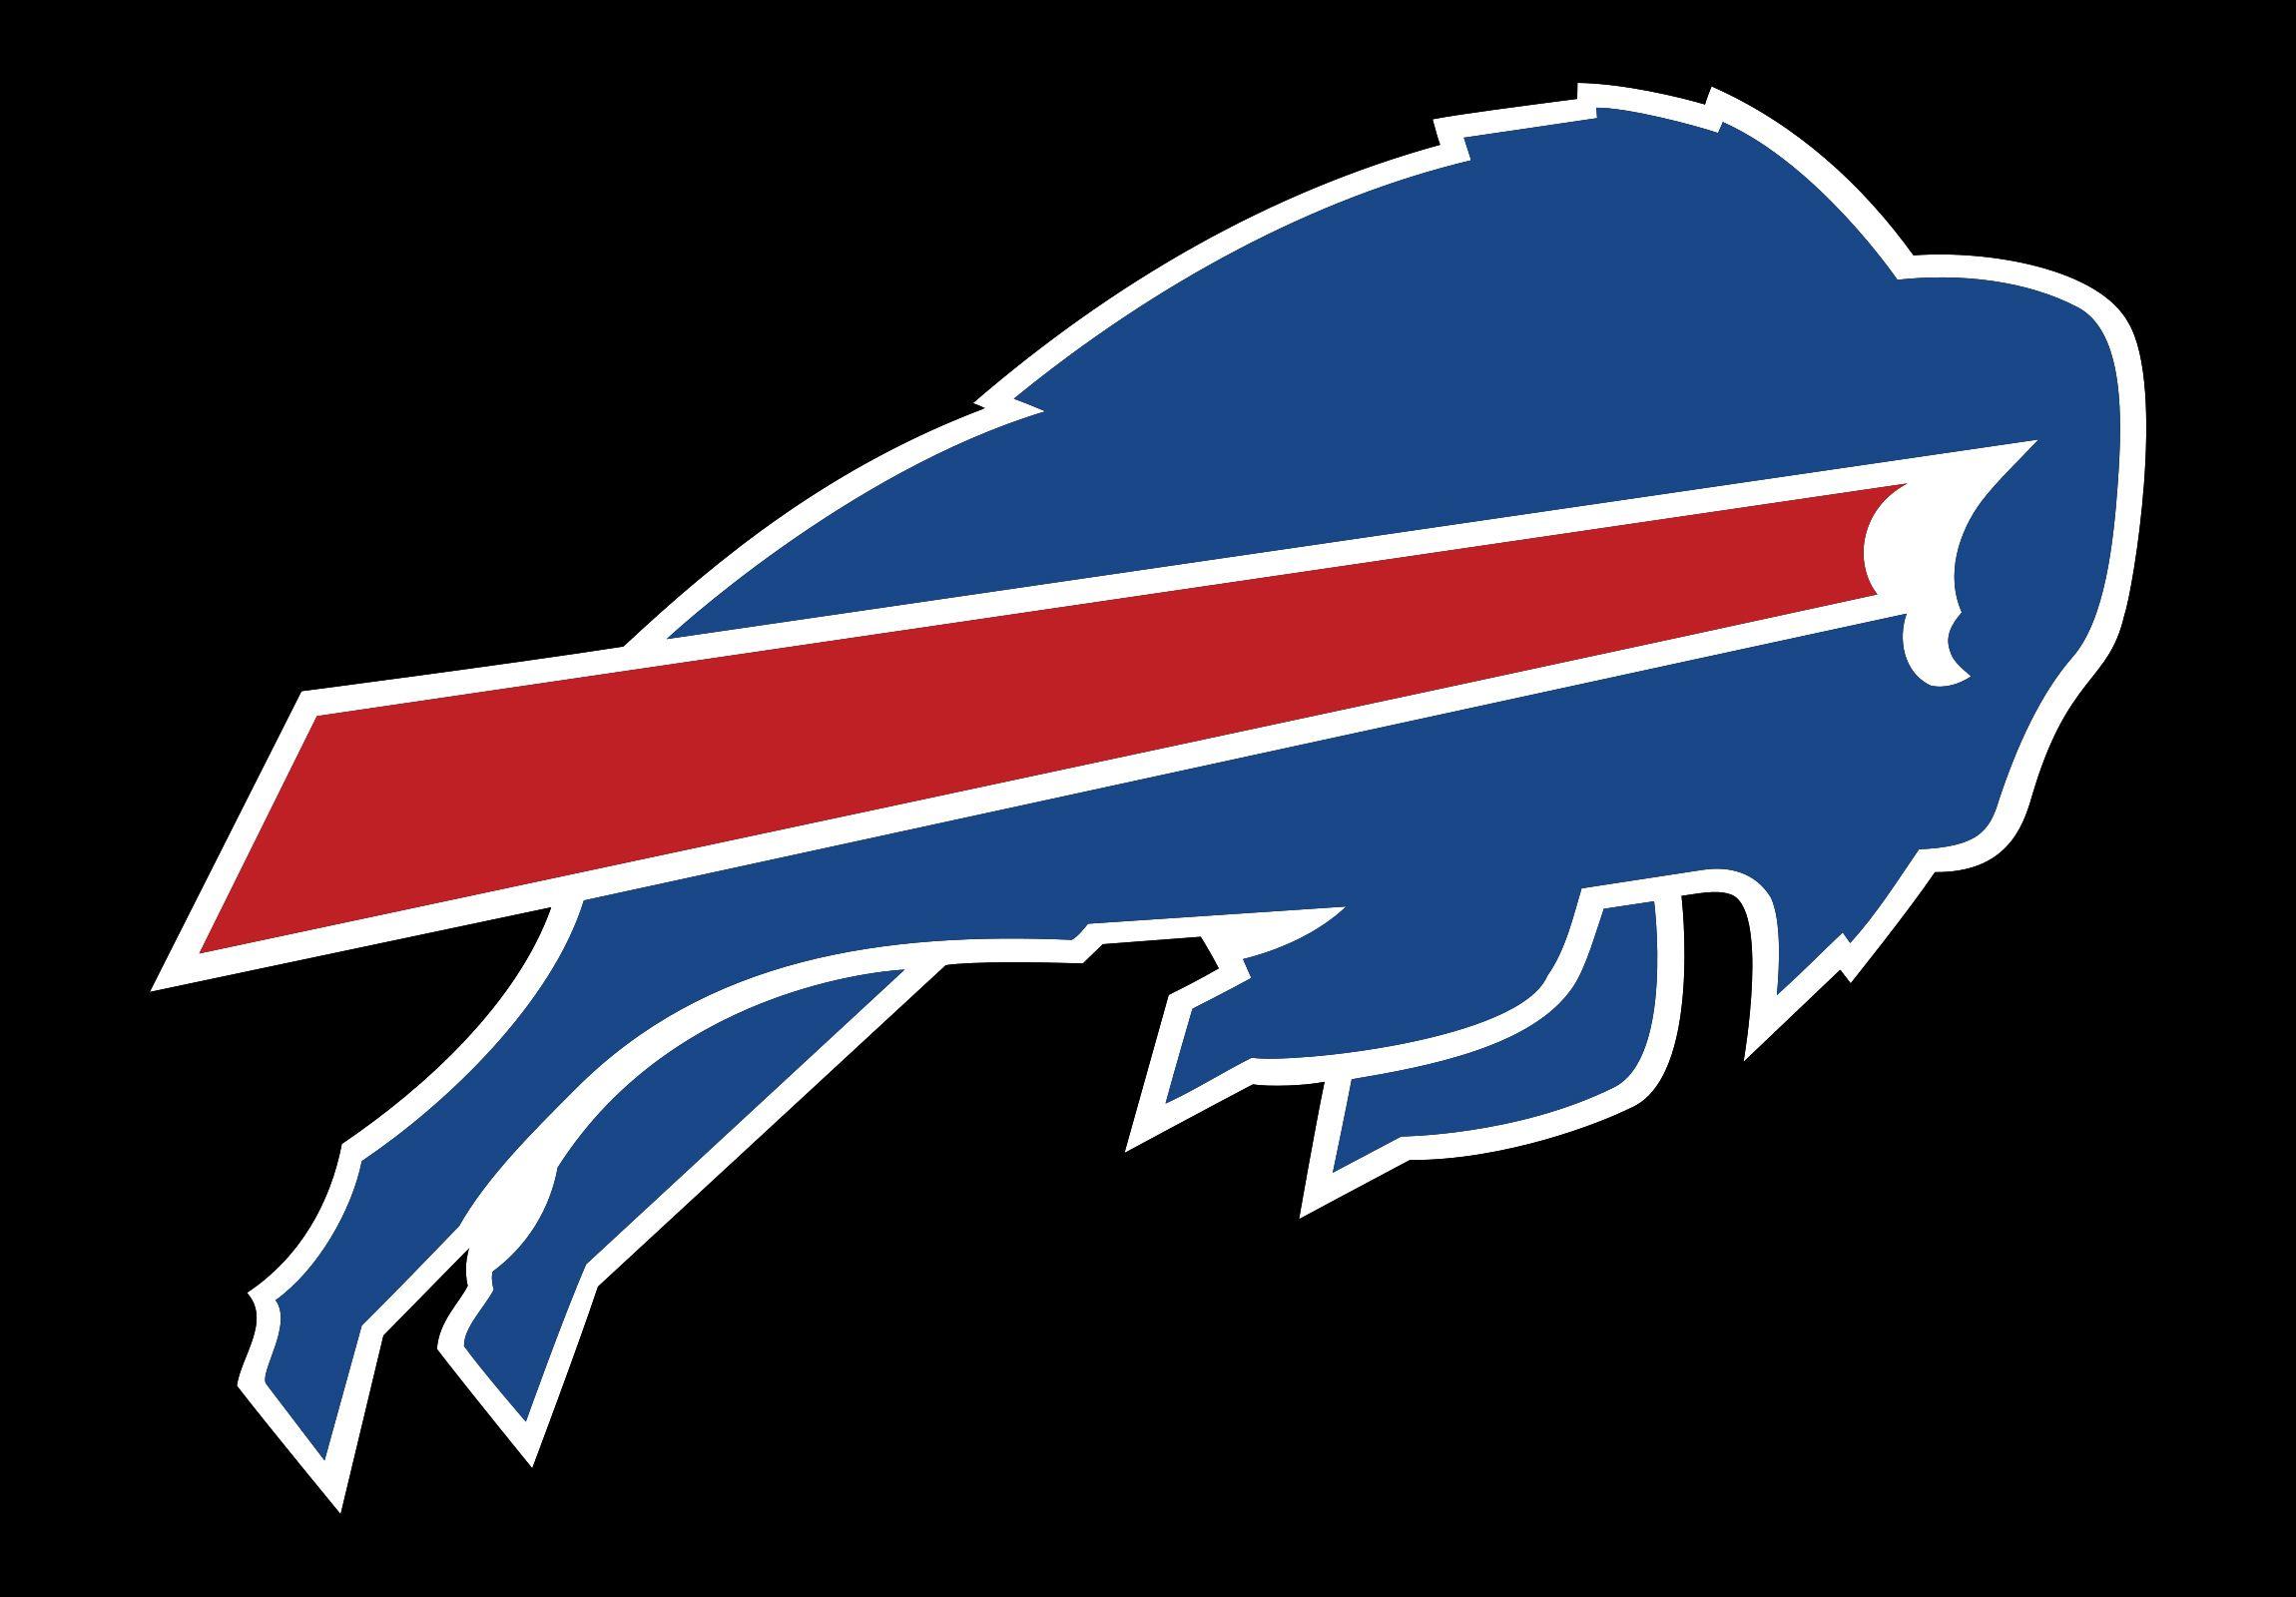 Buffalo Bills Football